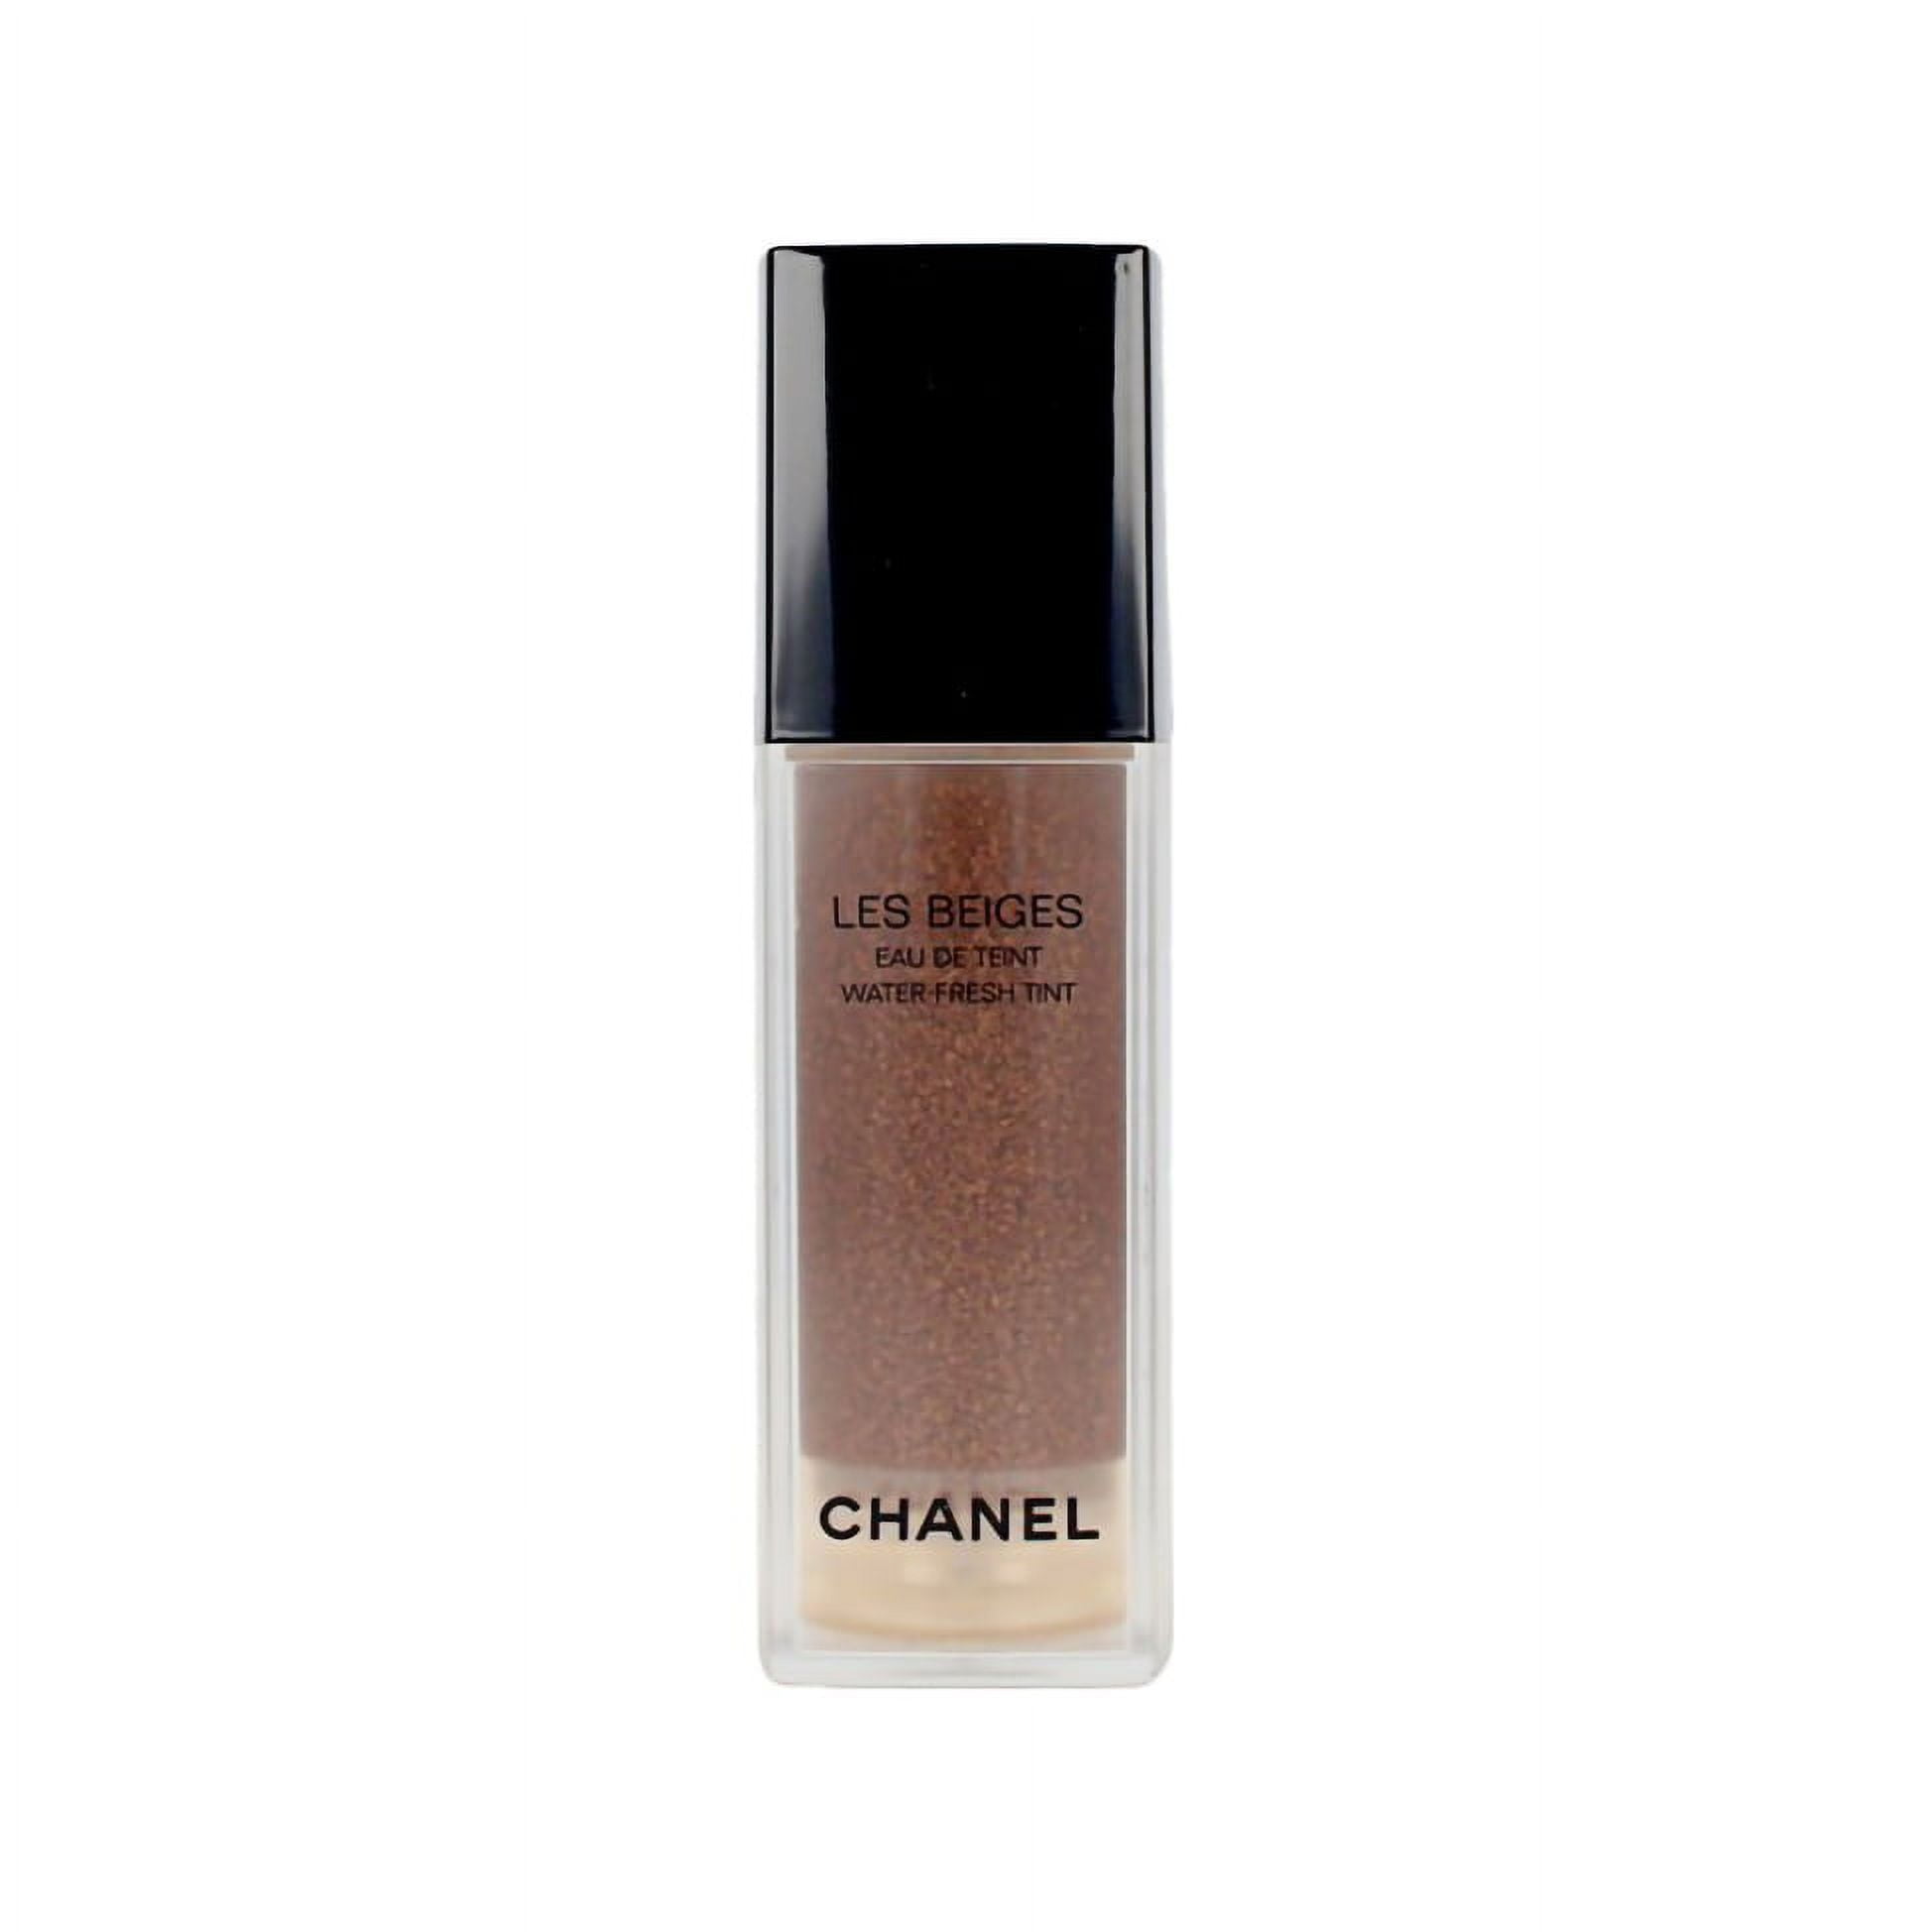 Chanel Les Beiges Water Fresh Tint - 158.860 Deep - 1.0 oz / 30 ml New 